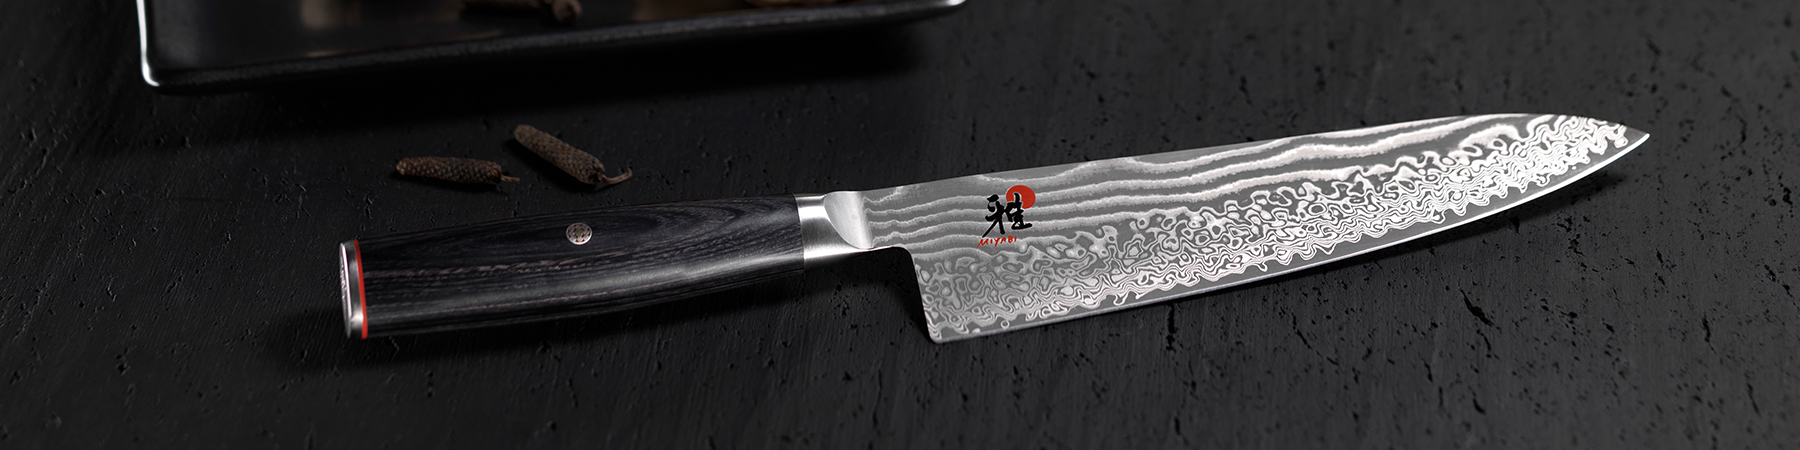 Japanske knive